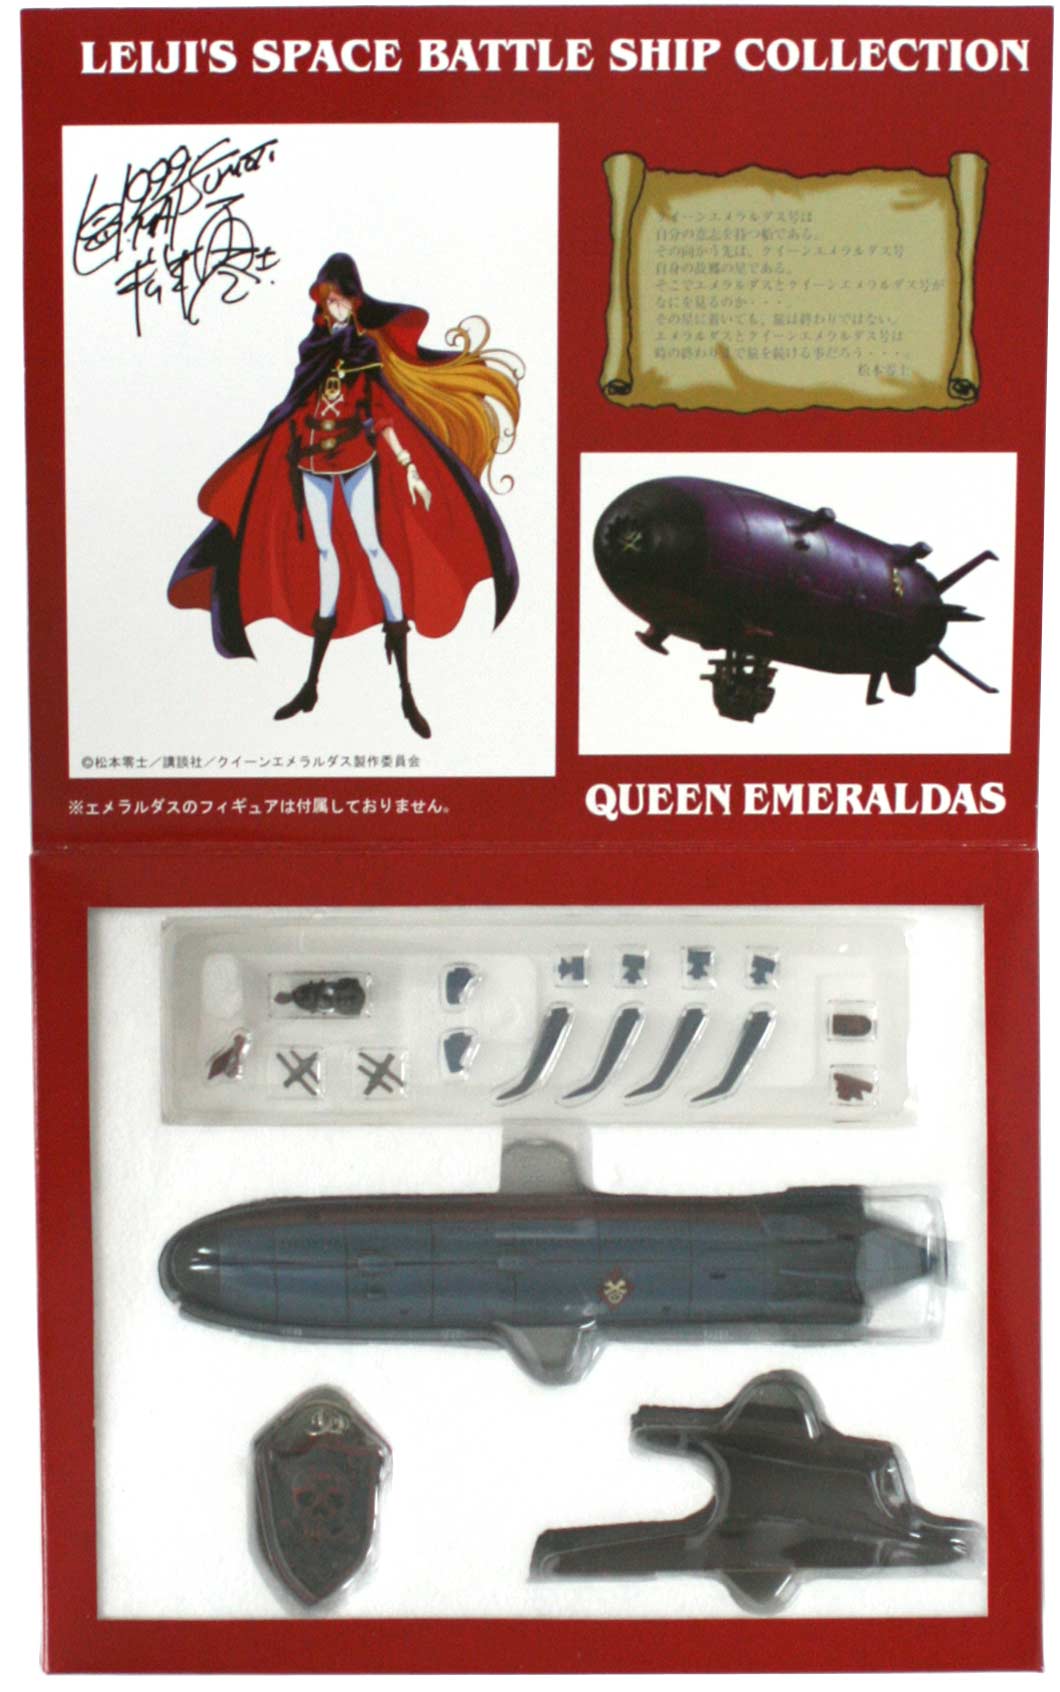 Packaging (ouvert) du Queen Emeraldas - Leiji's Space ship collection (jouet)